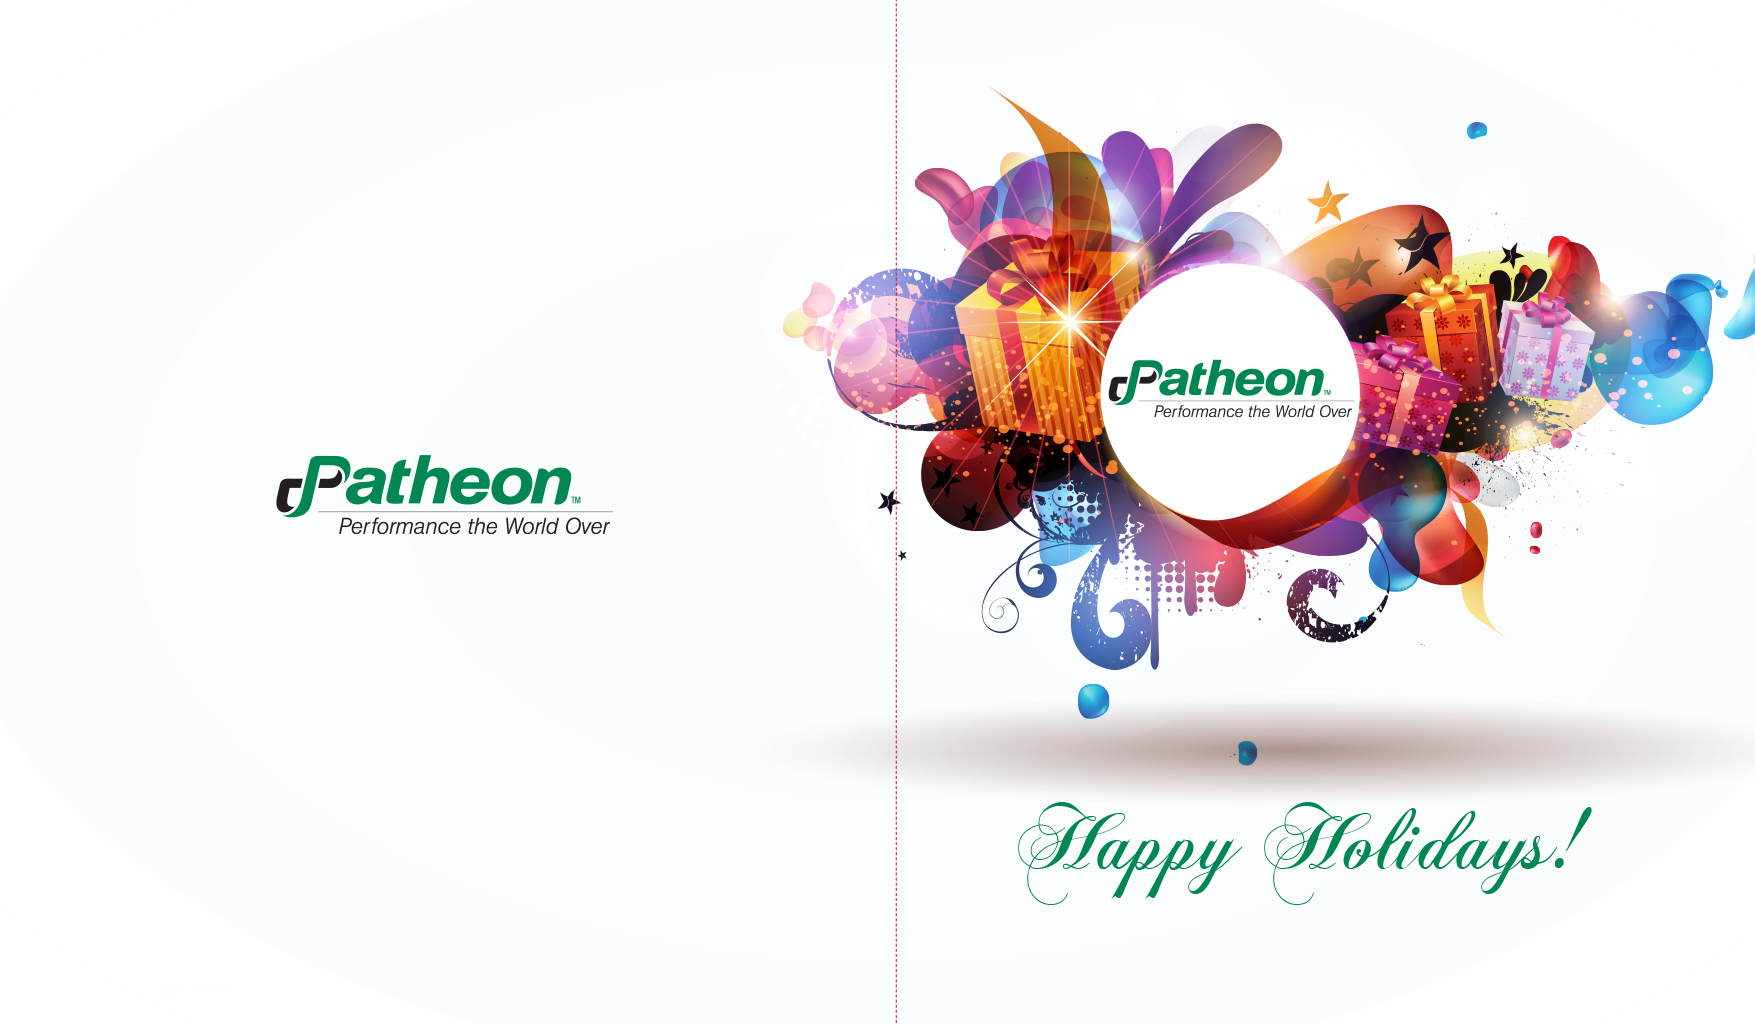 Patheon Holiday Card